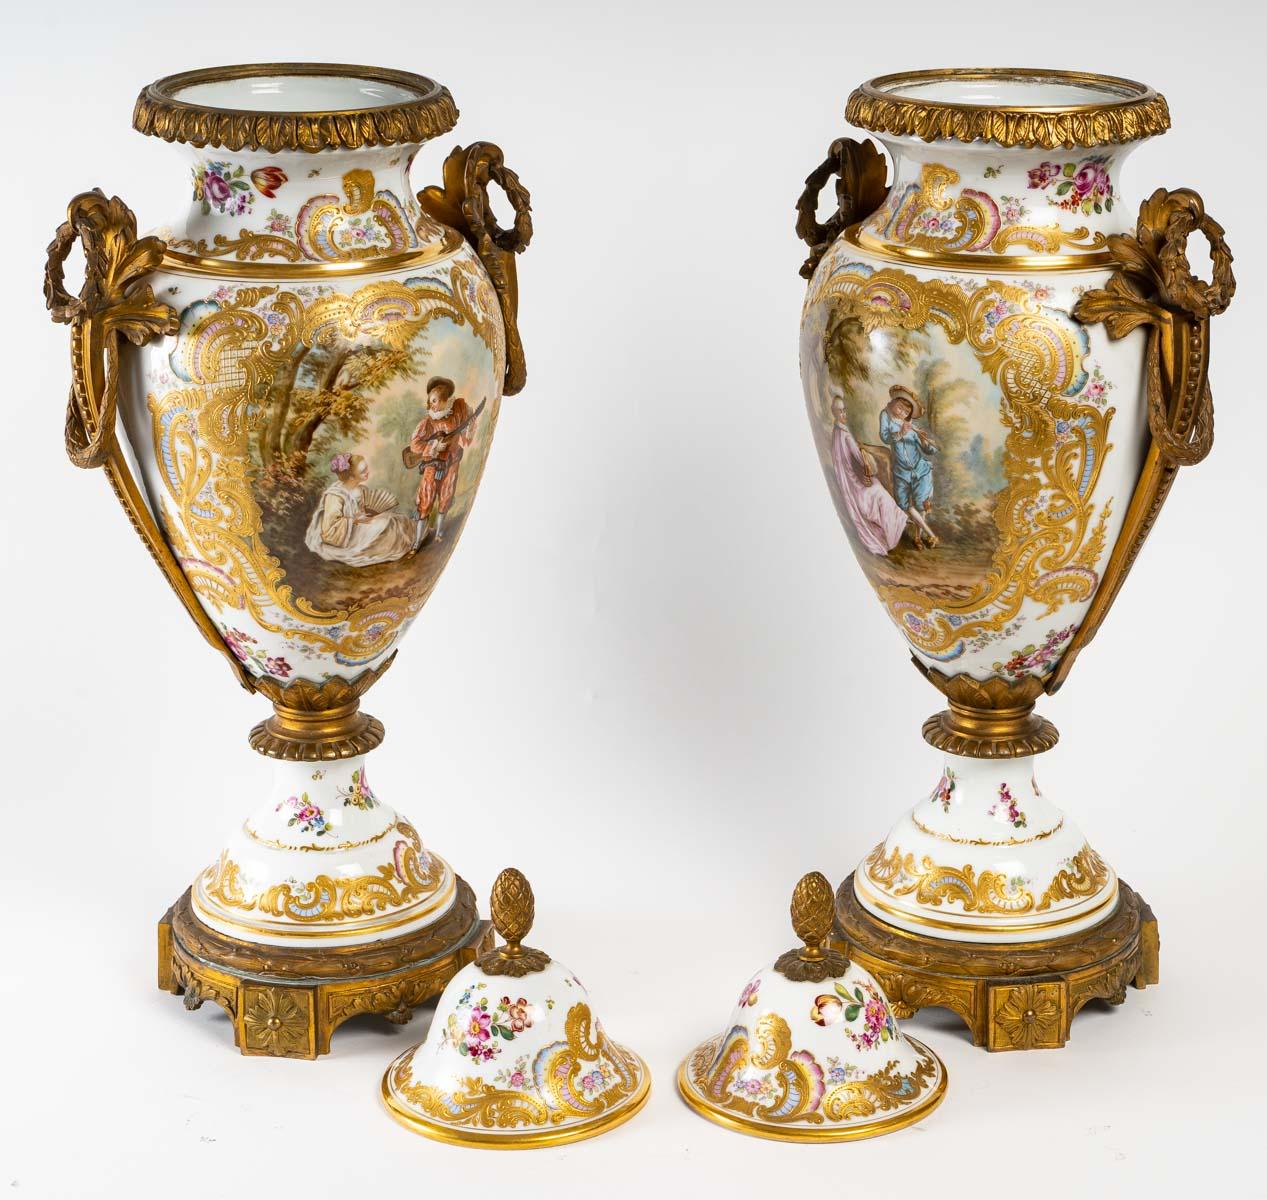 Gilt Pair of Sèvres porcelain covered vases, 19th century